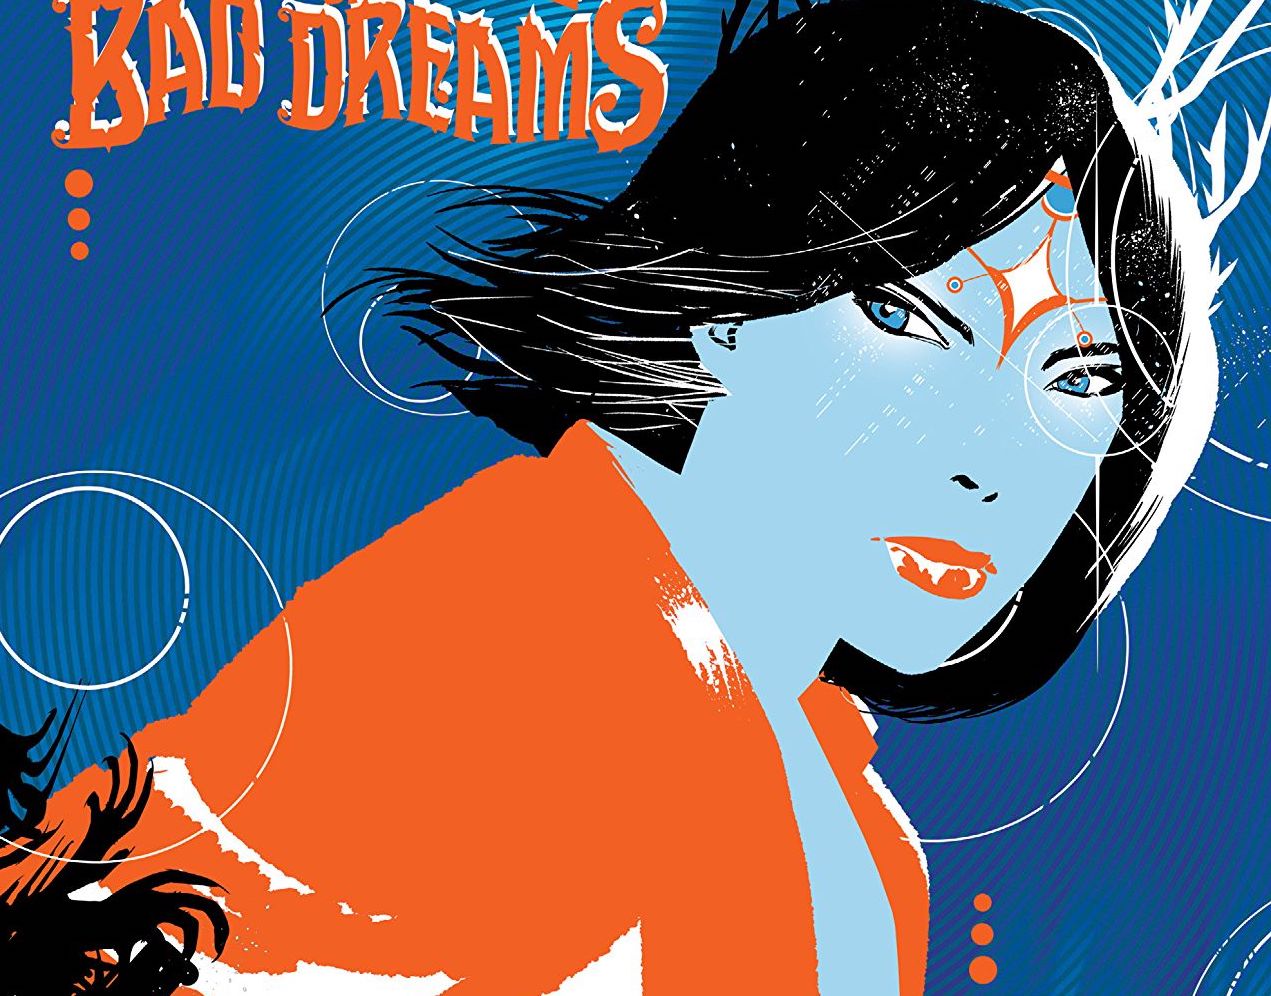 Queen of Bad Dreams Vol. 1 Review